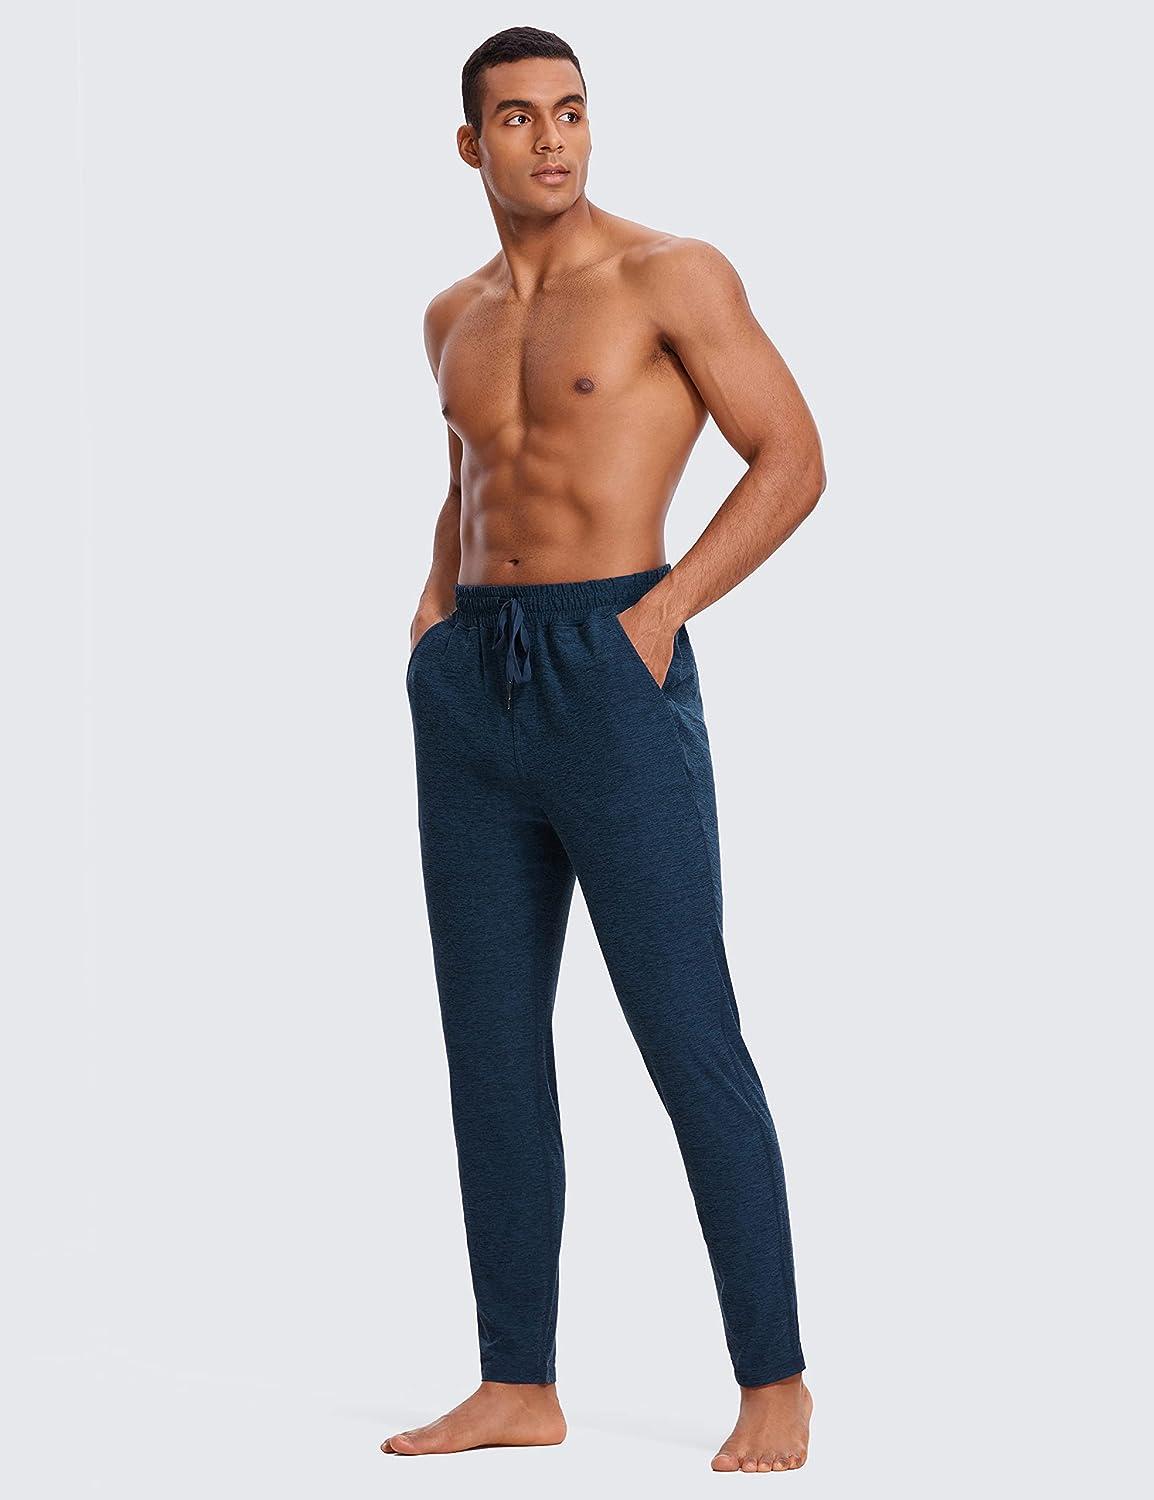 CRZ YOGA Mens Comfy Lounge Pants 30 - Super-Soft Open Bottom Yoga Casual  Pajama Pants Athletic Sweatpants with Pockets Large Navy Blue Heather